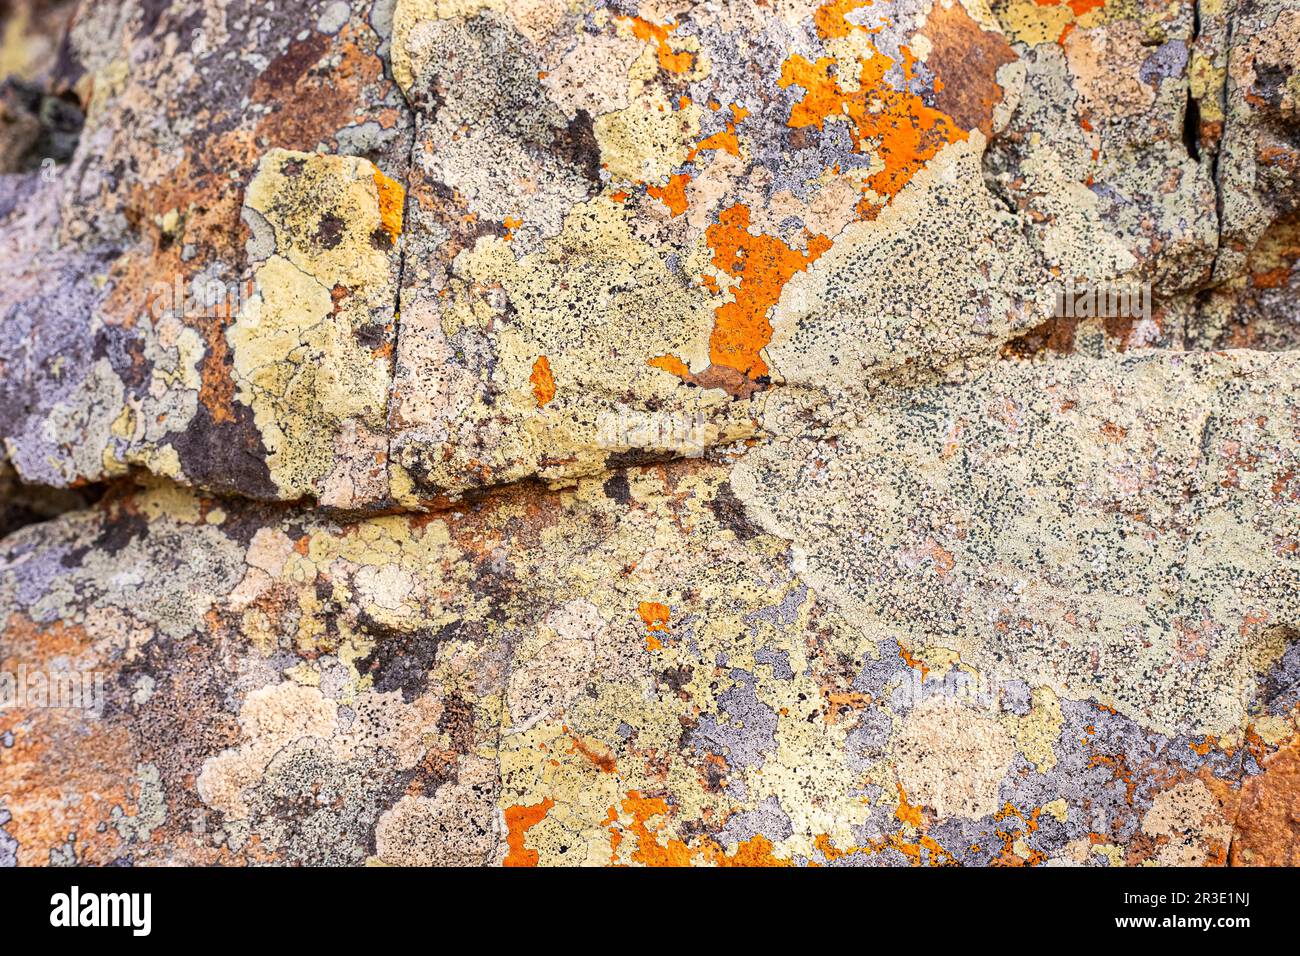 Macro texture of orange and black lichen moss growing on mountain rock Stock Photo